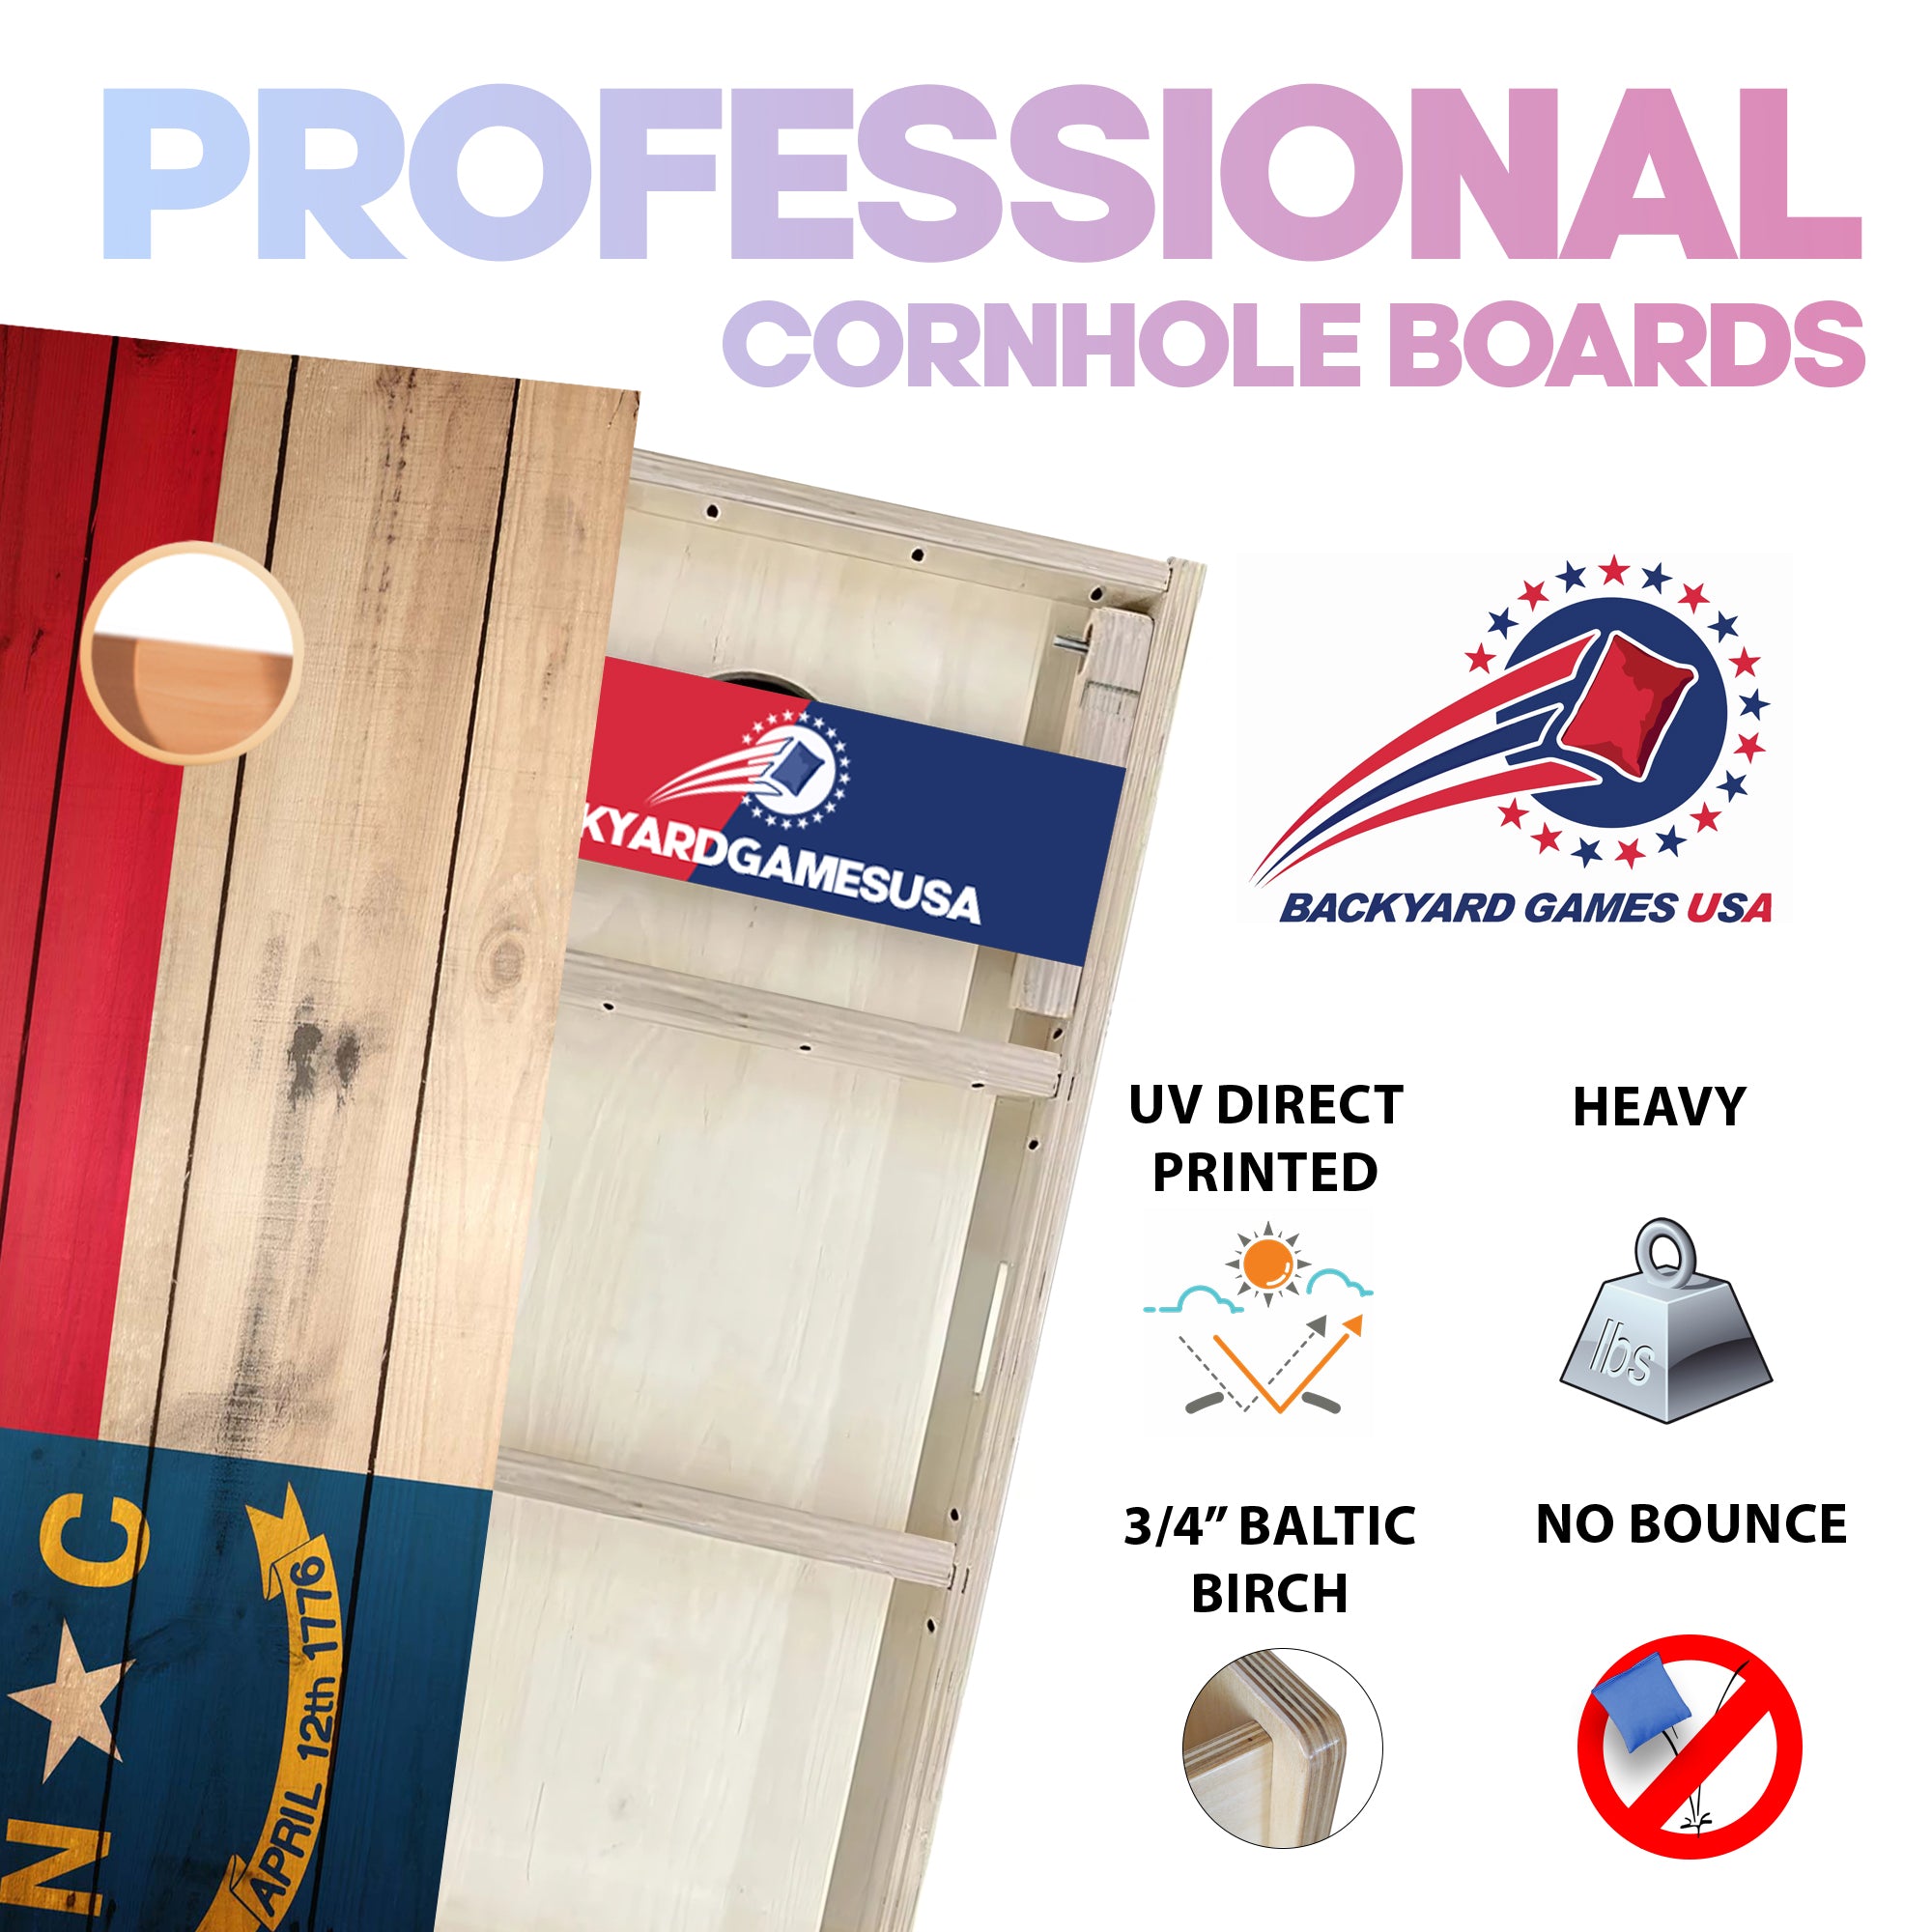 North Carolina Professional Cornhole Boards